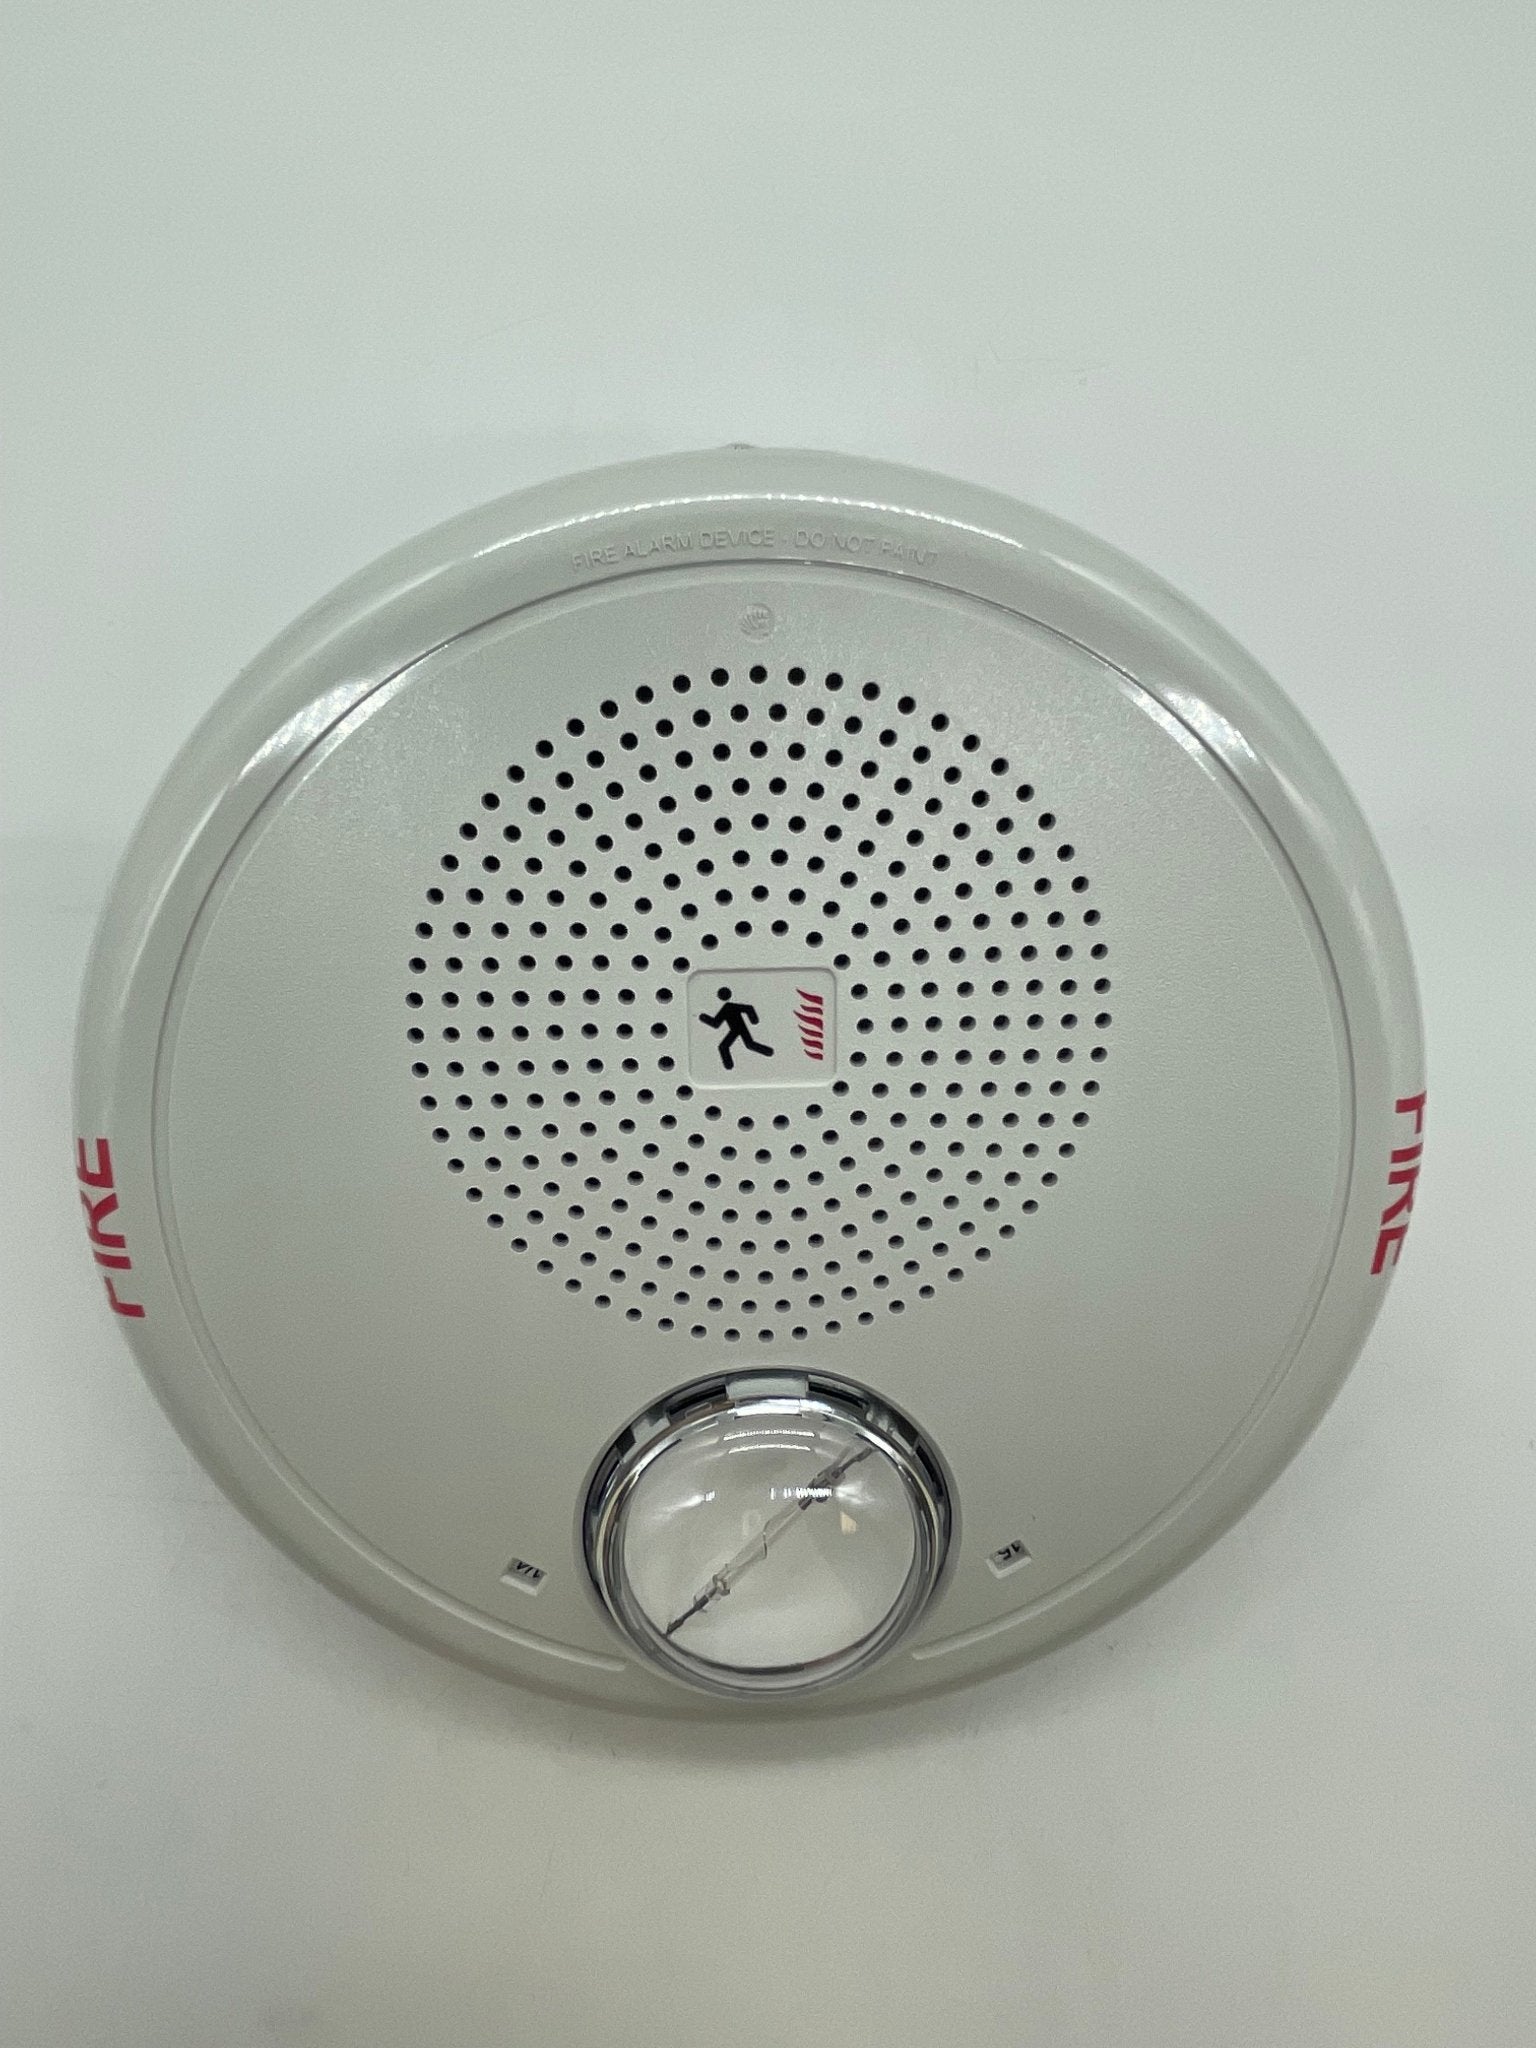 Edwards GCHFWF-S7VMC - The Fire Alarm Supplier